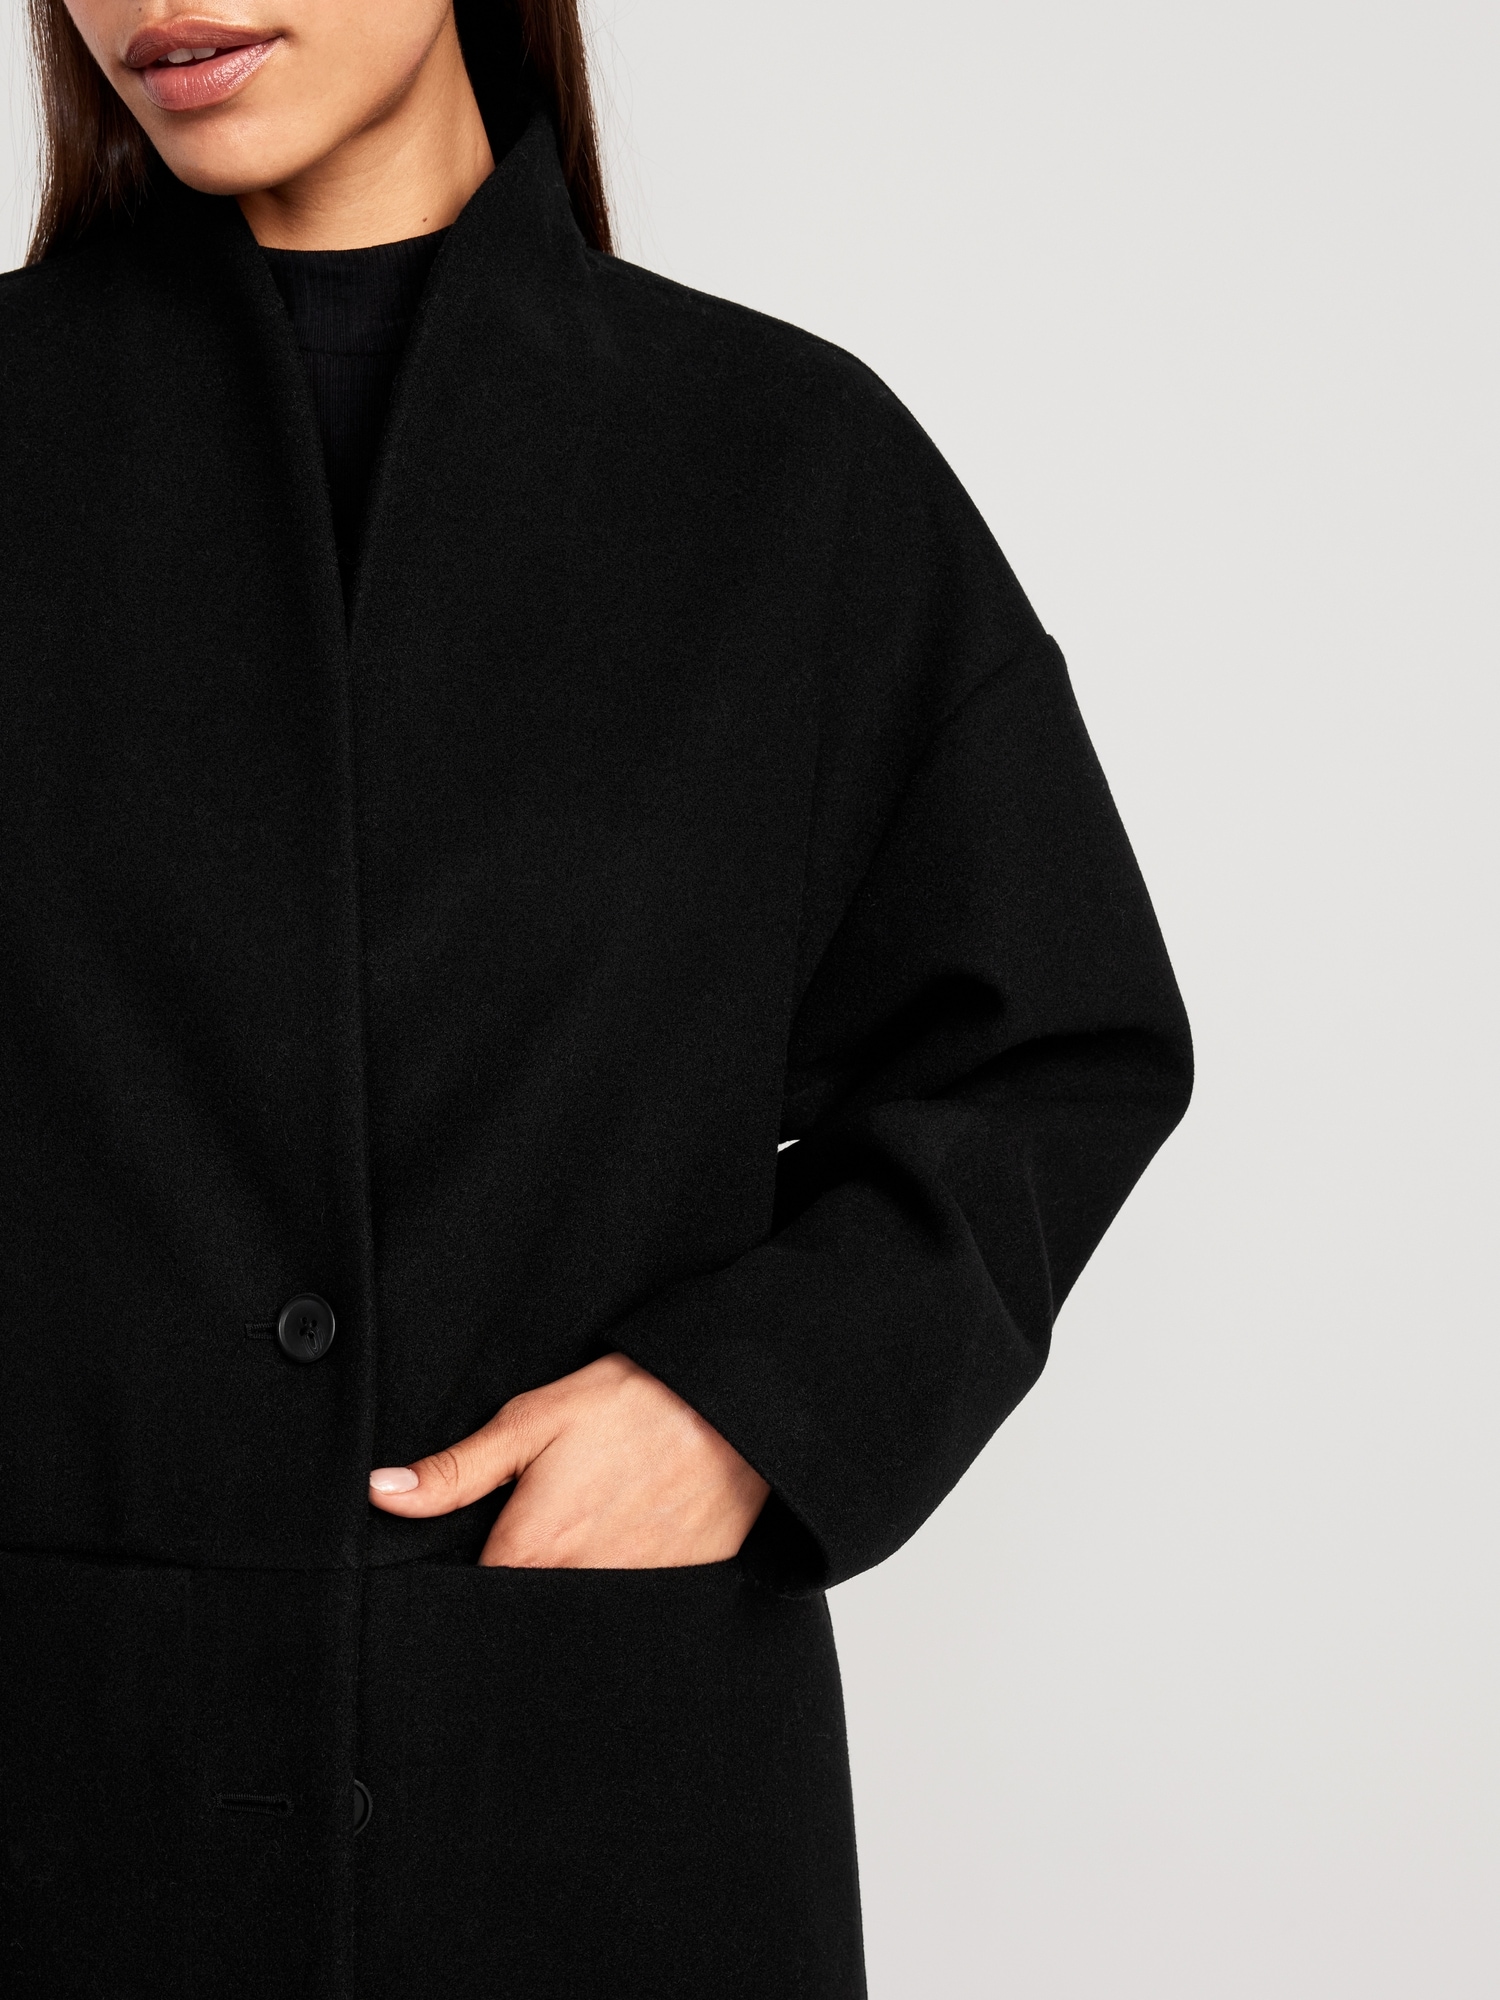 Long-Line Cardigan Coat